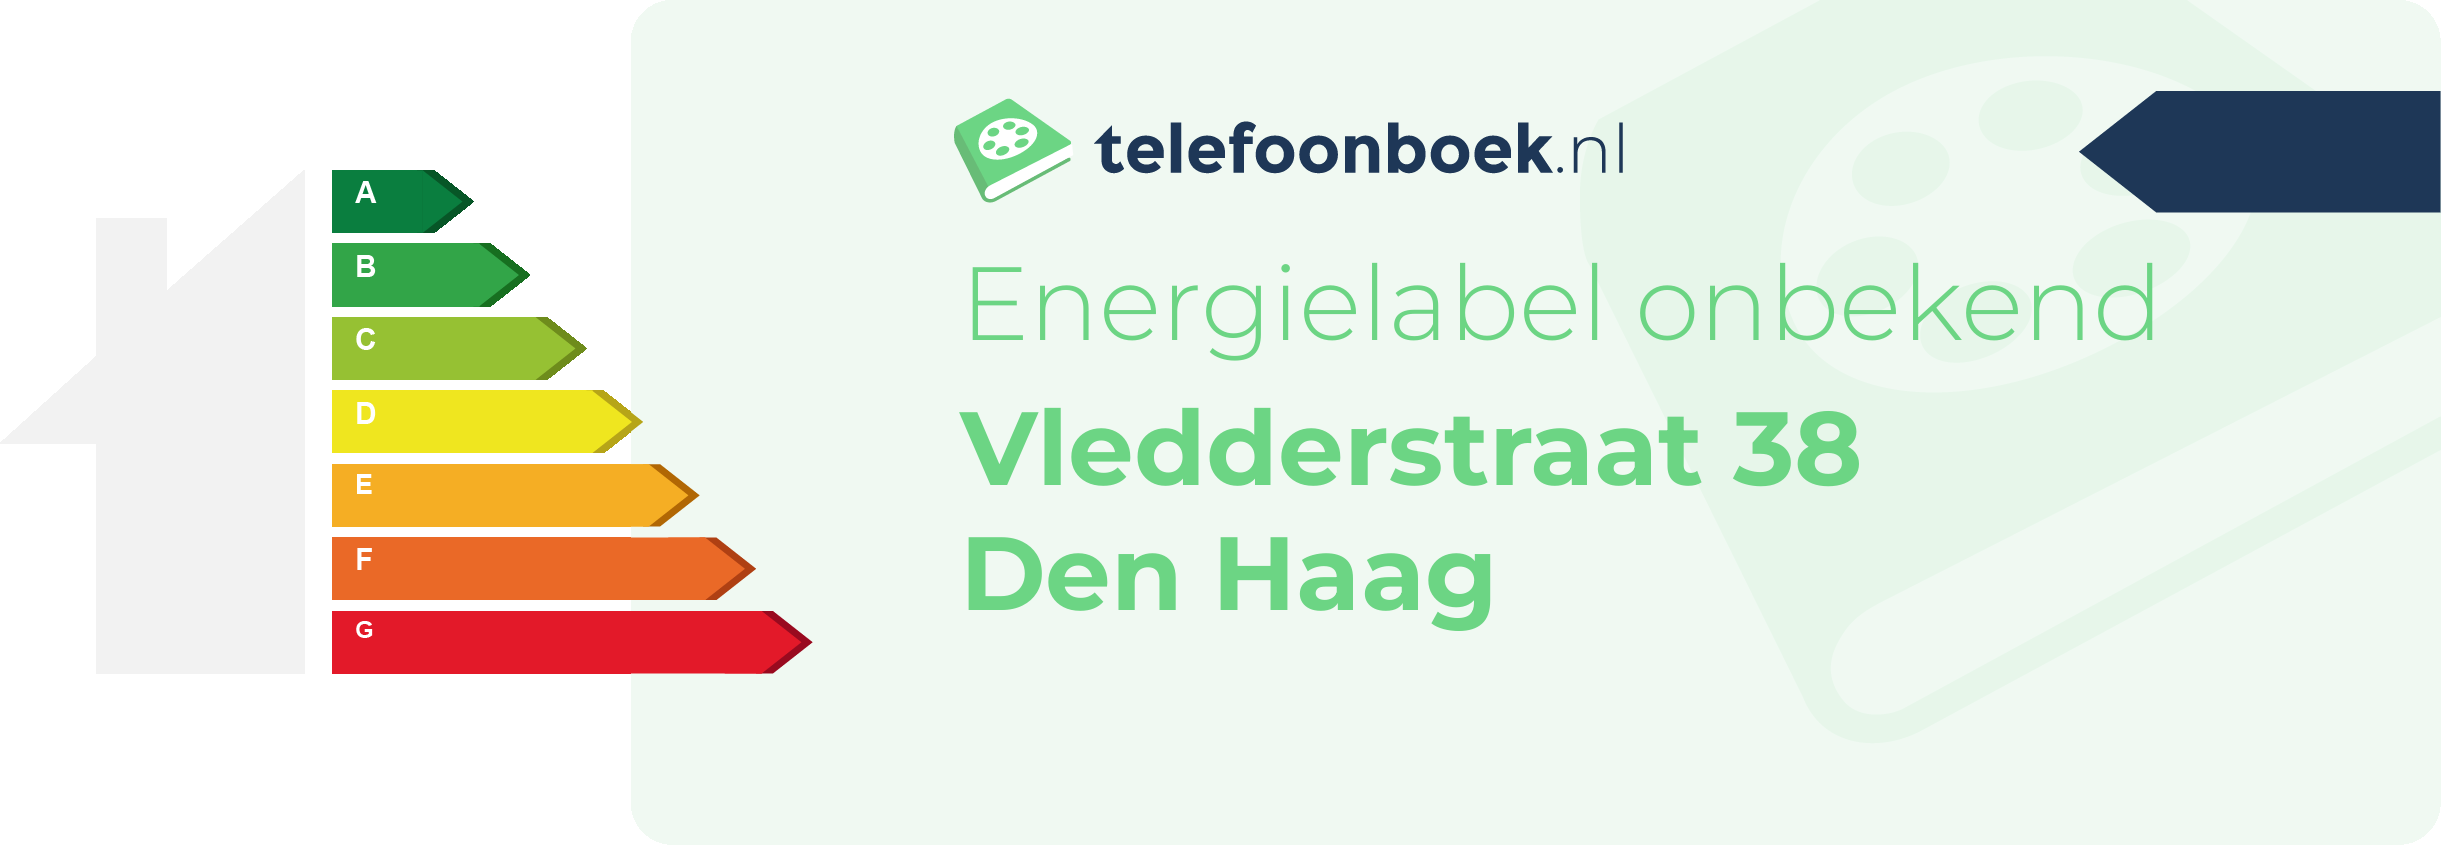 Energielabel Vledderstraat 38 Den Haag